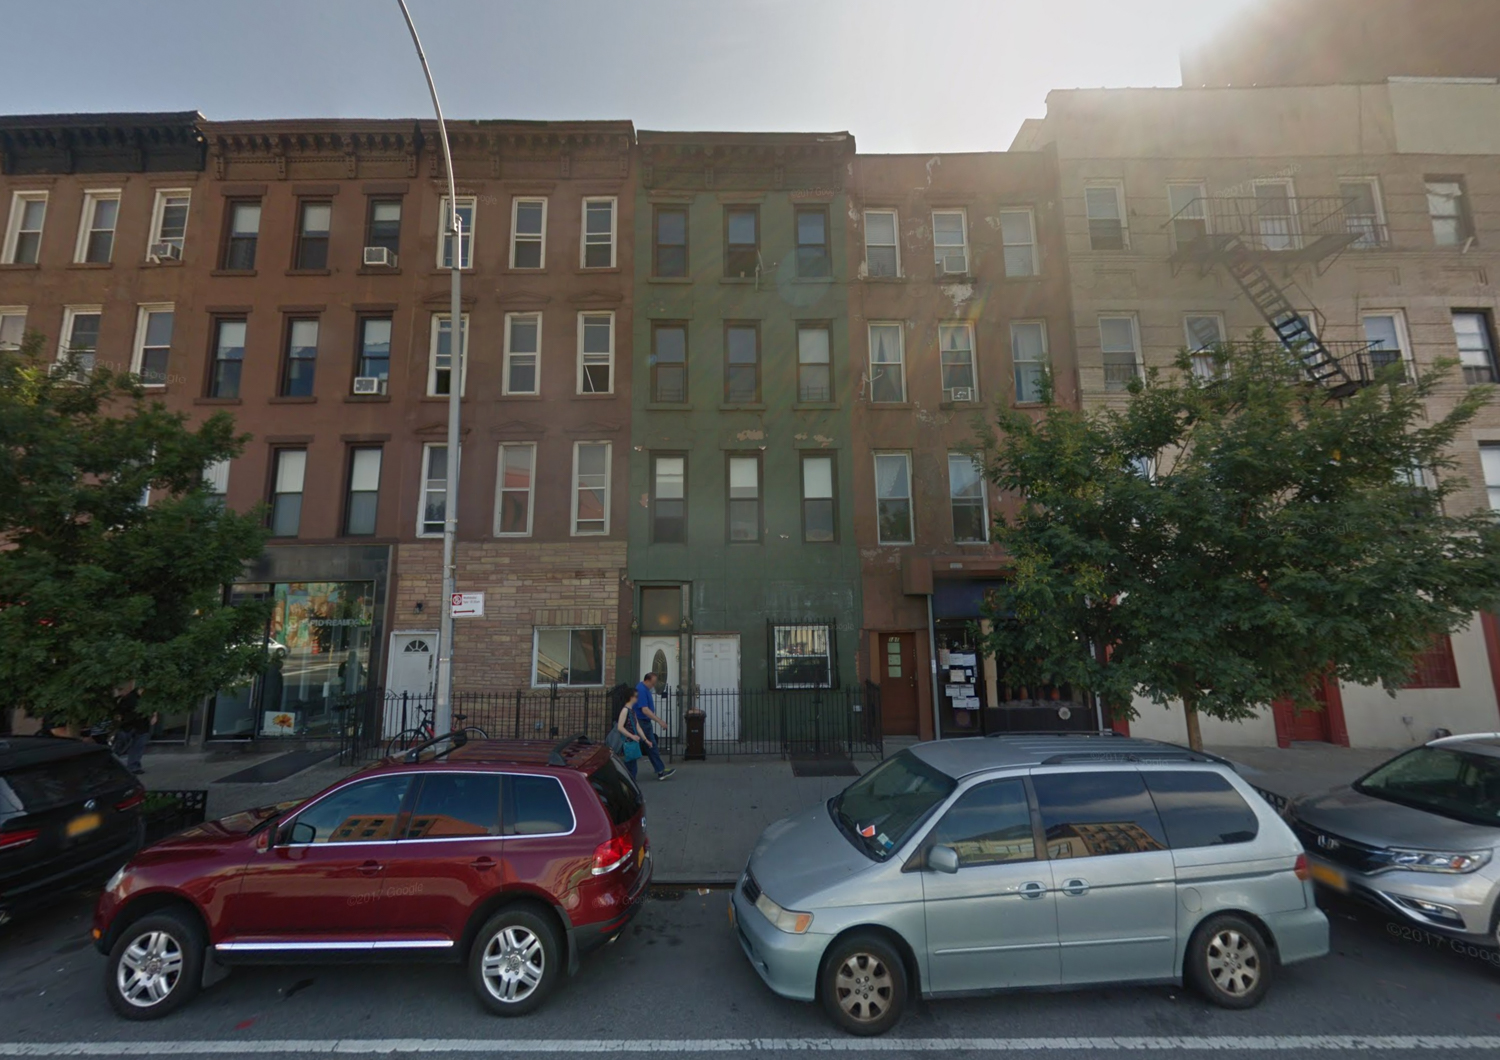 179 4th Avenue, via Google Maps